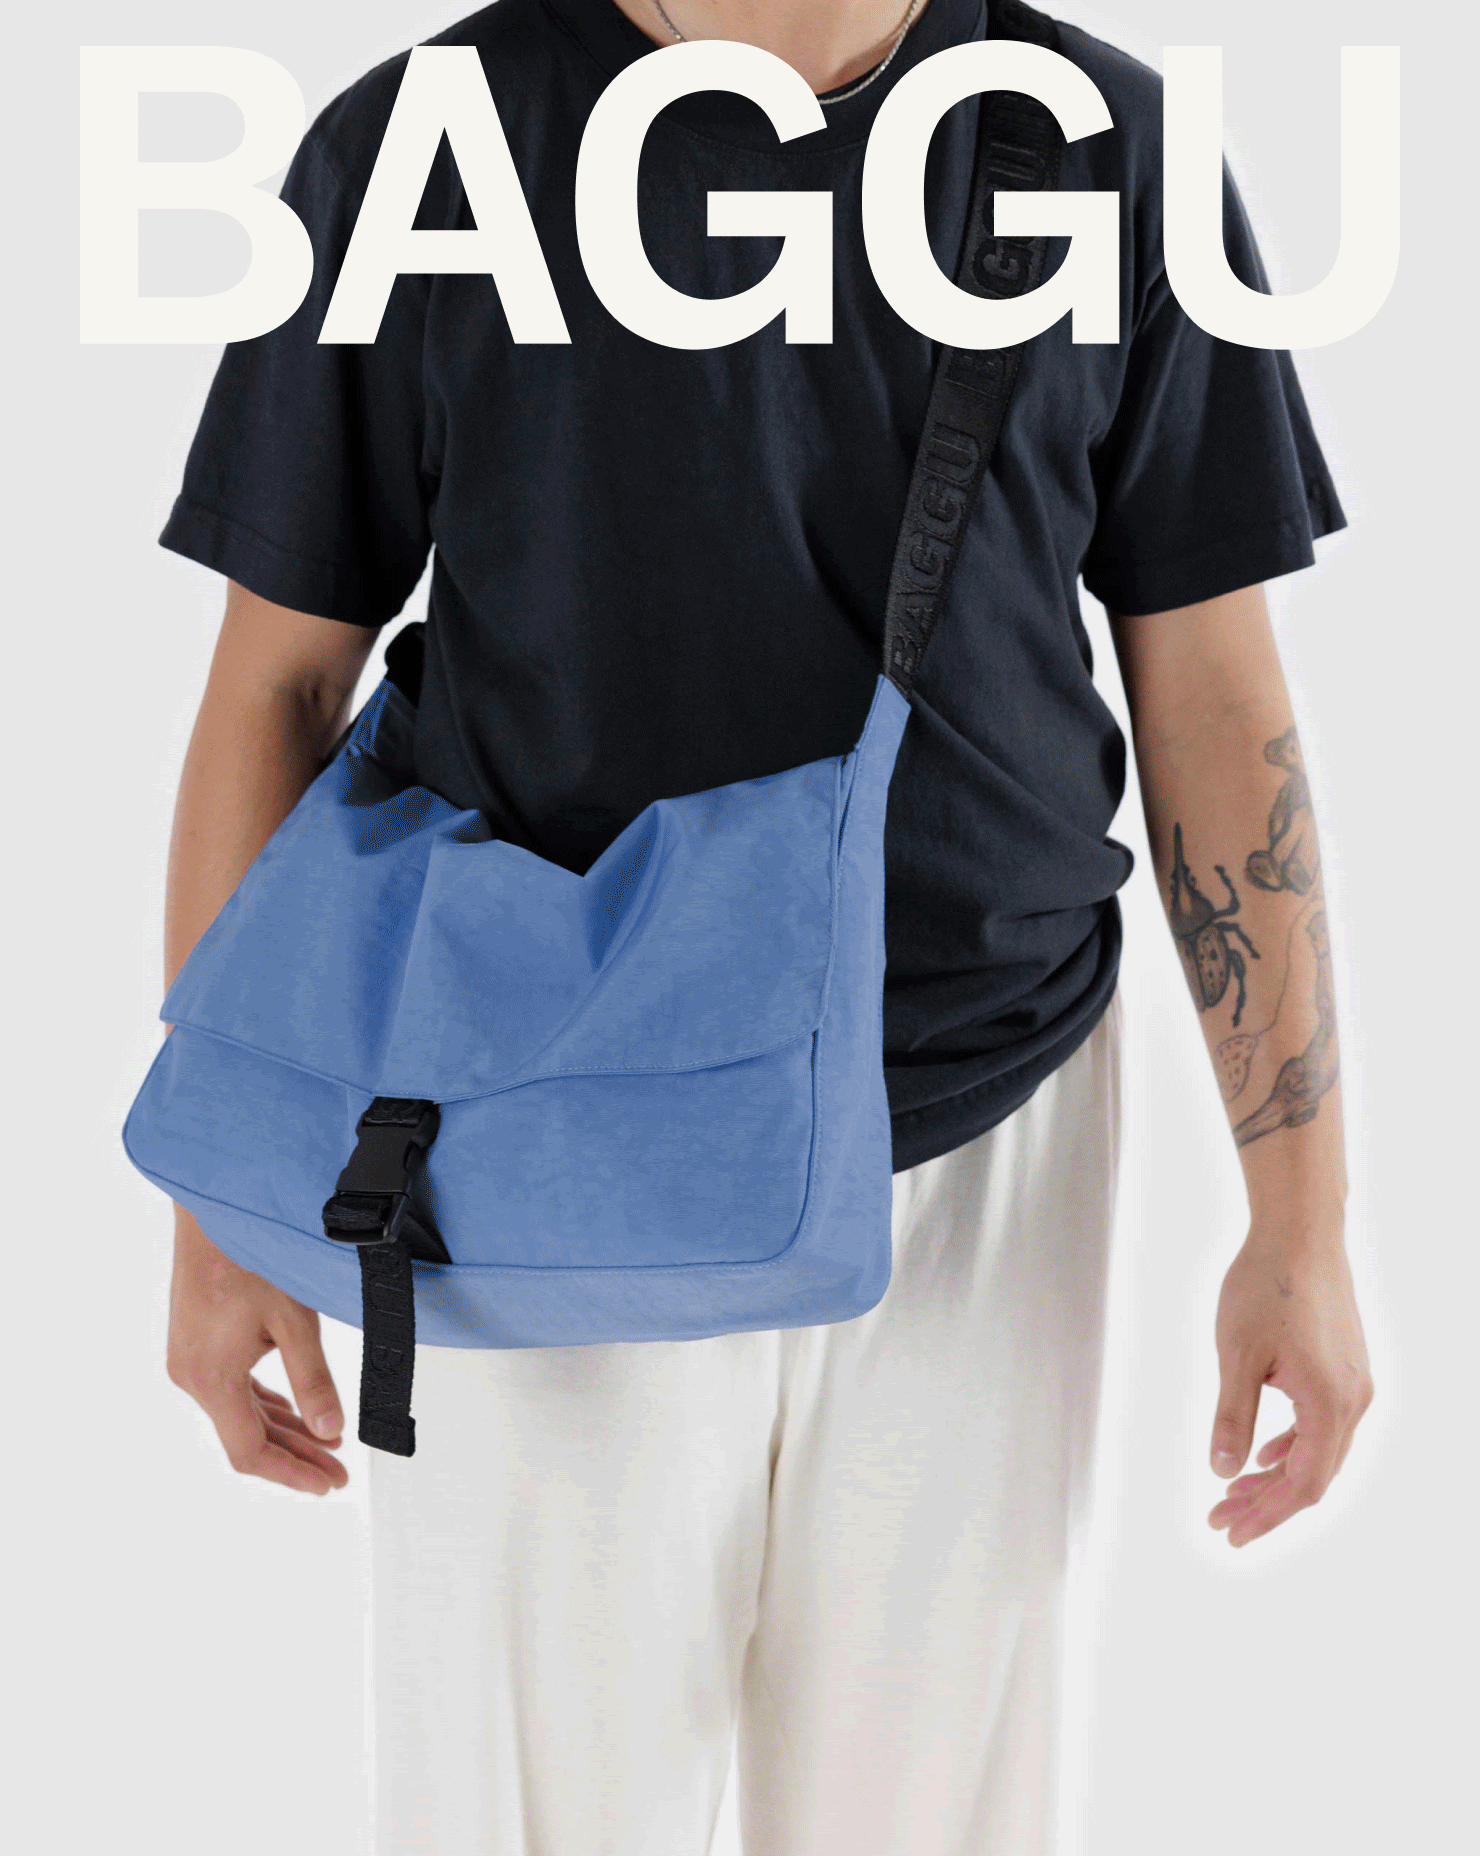 BAGGU Nylon Messenger Bag - Candy Apple - Preston ApothecaryBaggu